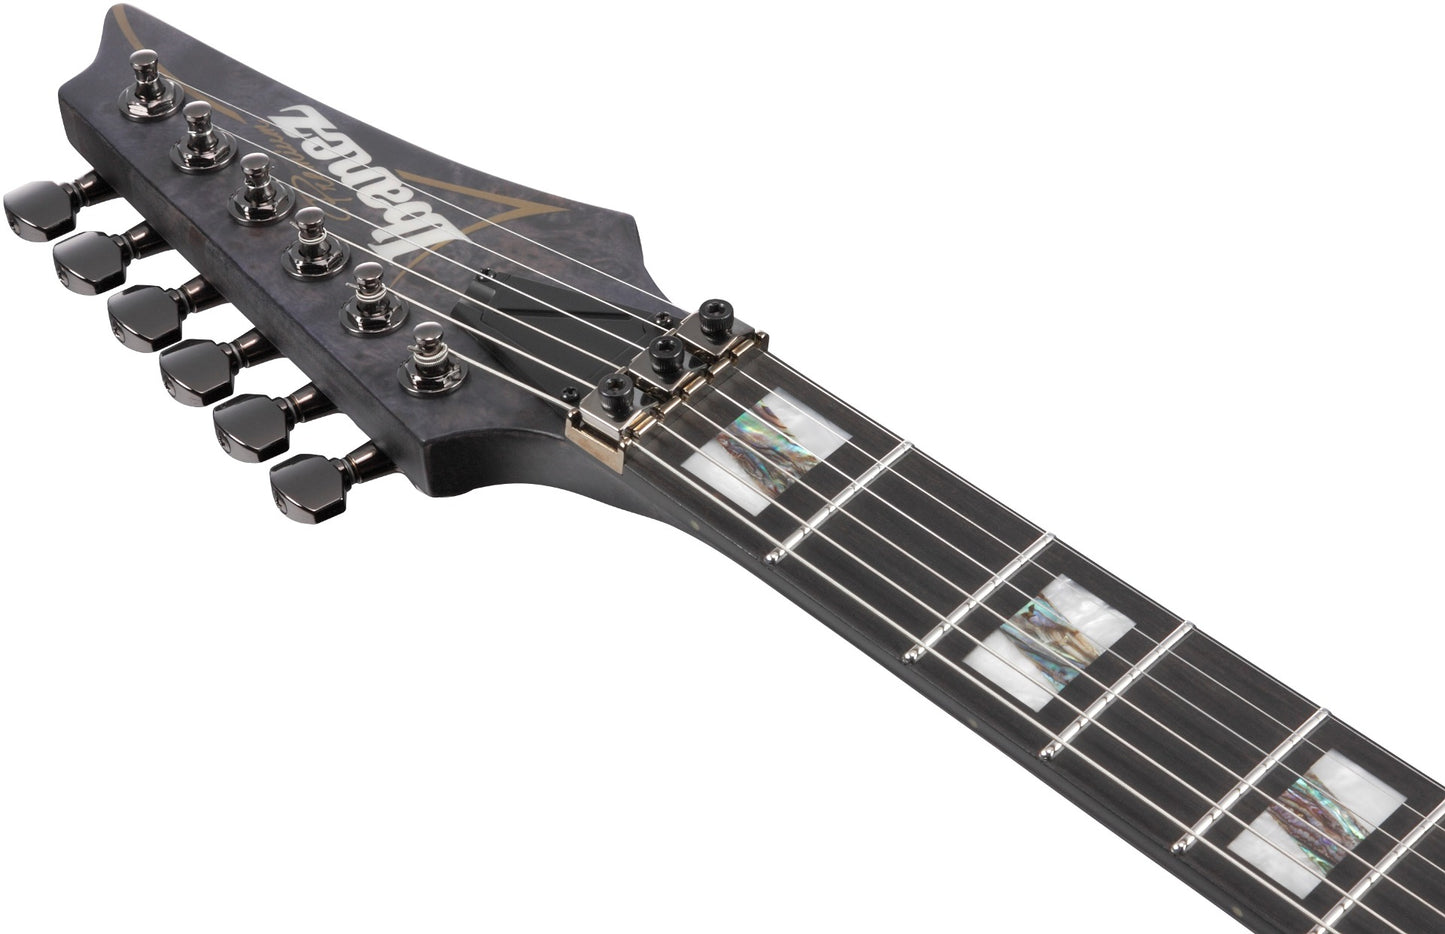 Ibanez RGT1270PBDTF RG Premium 6 - String Electric Guitar - Deep Twilight Flat